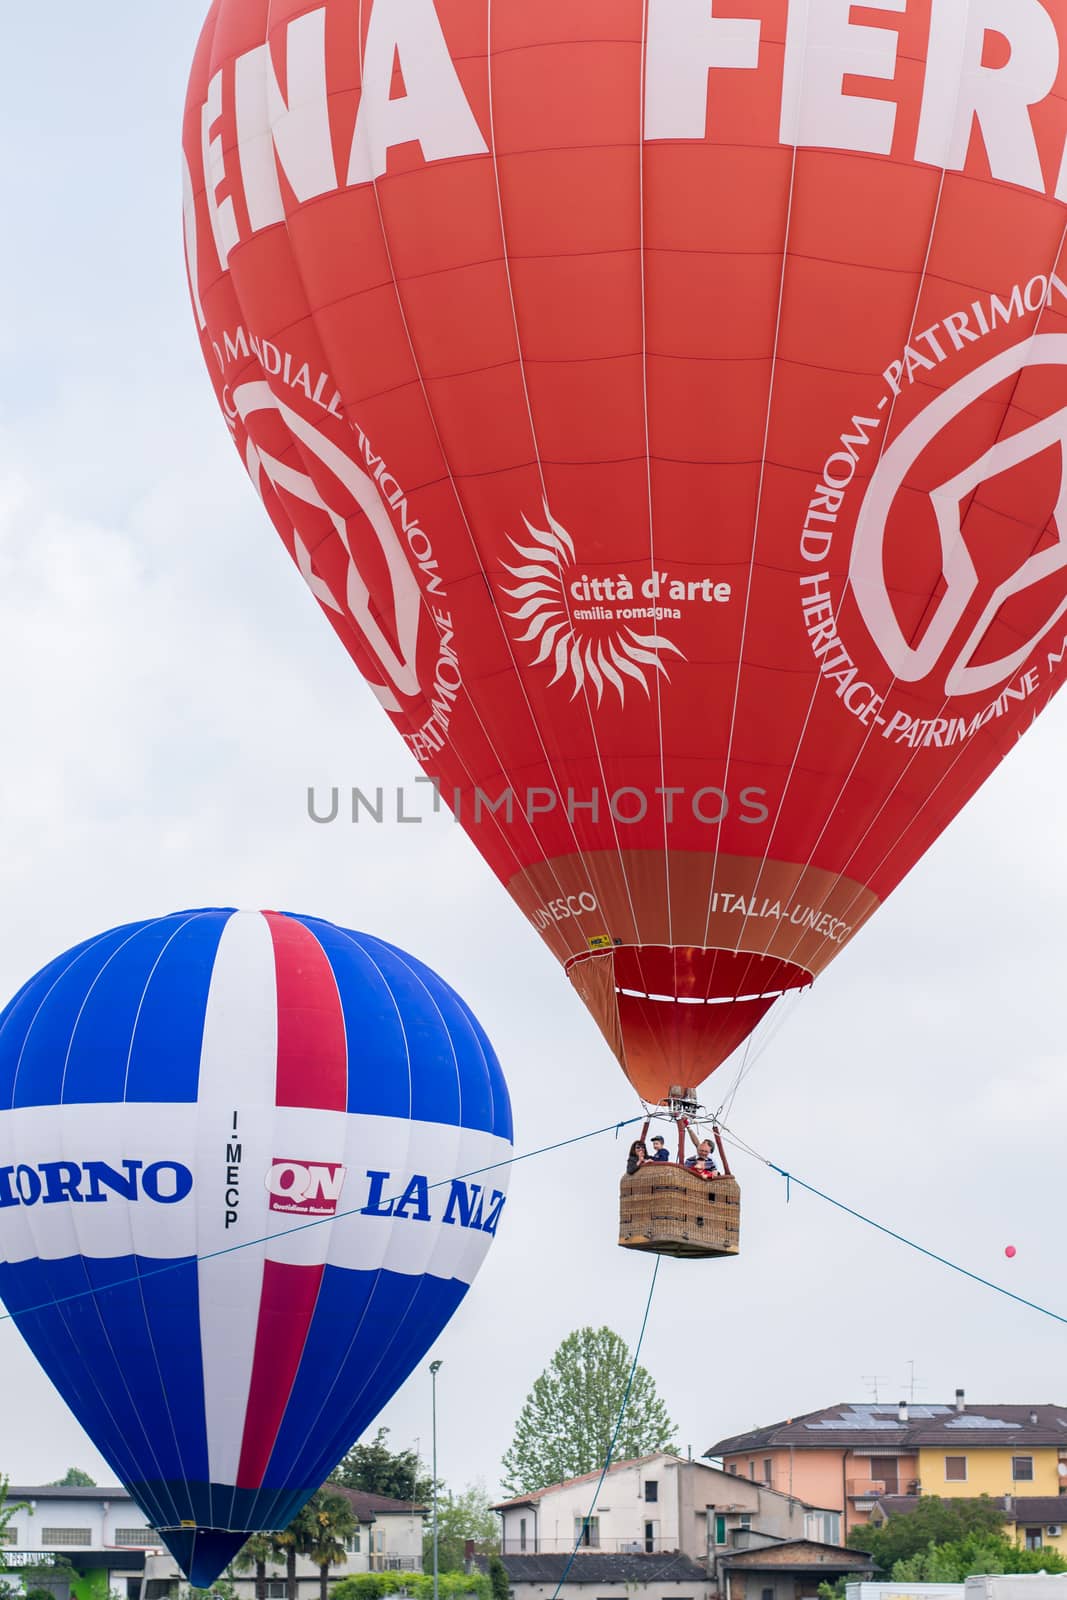 FERRARA, ITALY - SEPTEMBER 13: Ferrara ballon festival is a major annual gathering for fans of hot air balloons and paragliders on Ferrara Saturday, September 13, 2014.